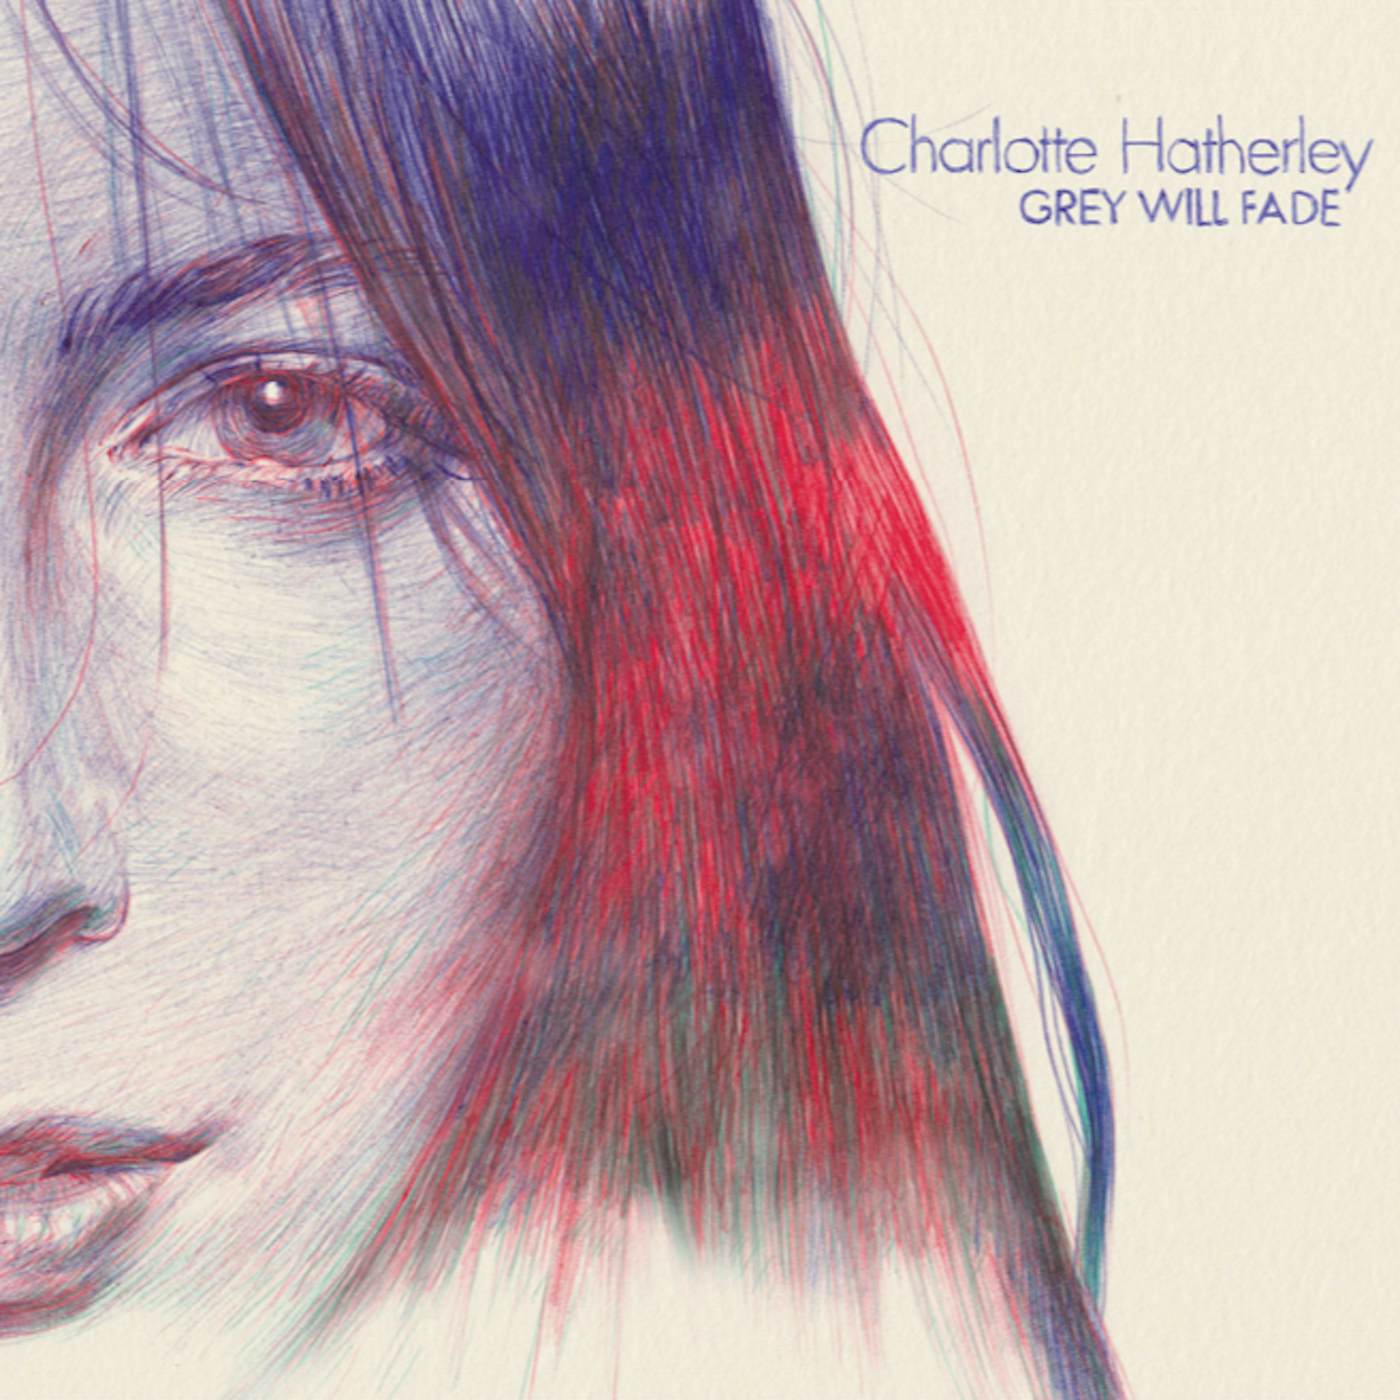 Charlotte Hatherley GREY WILL FADE Vinyl Record